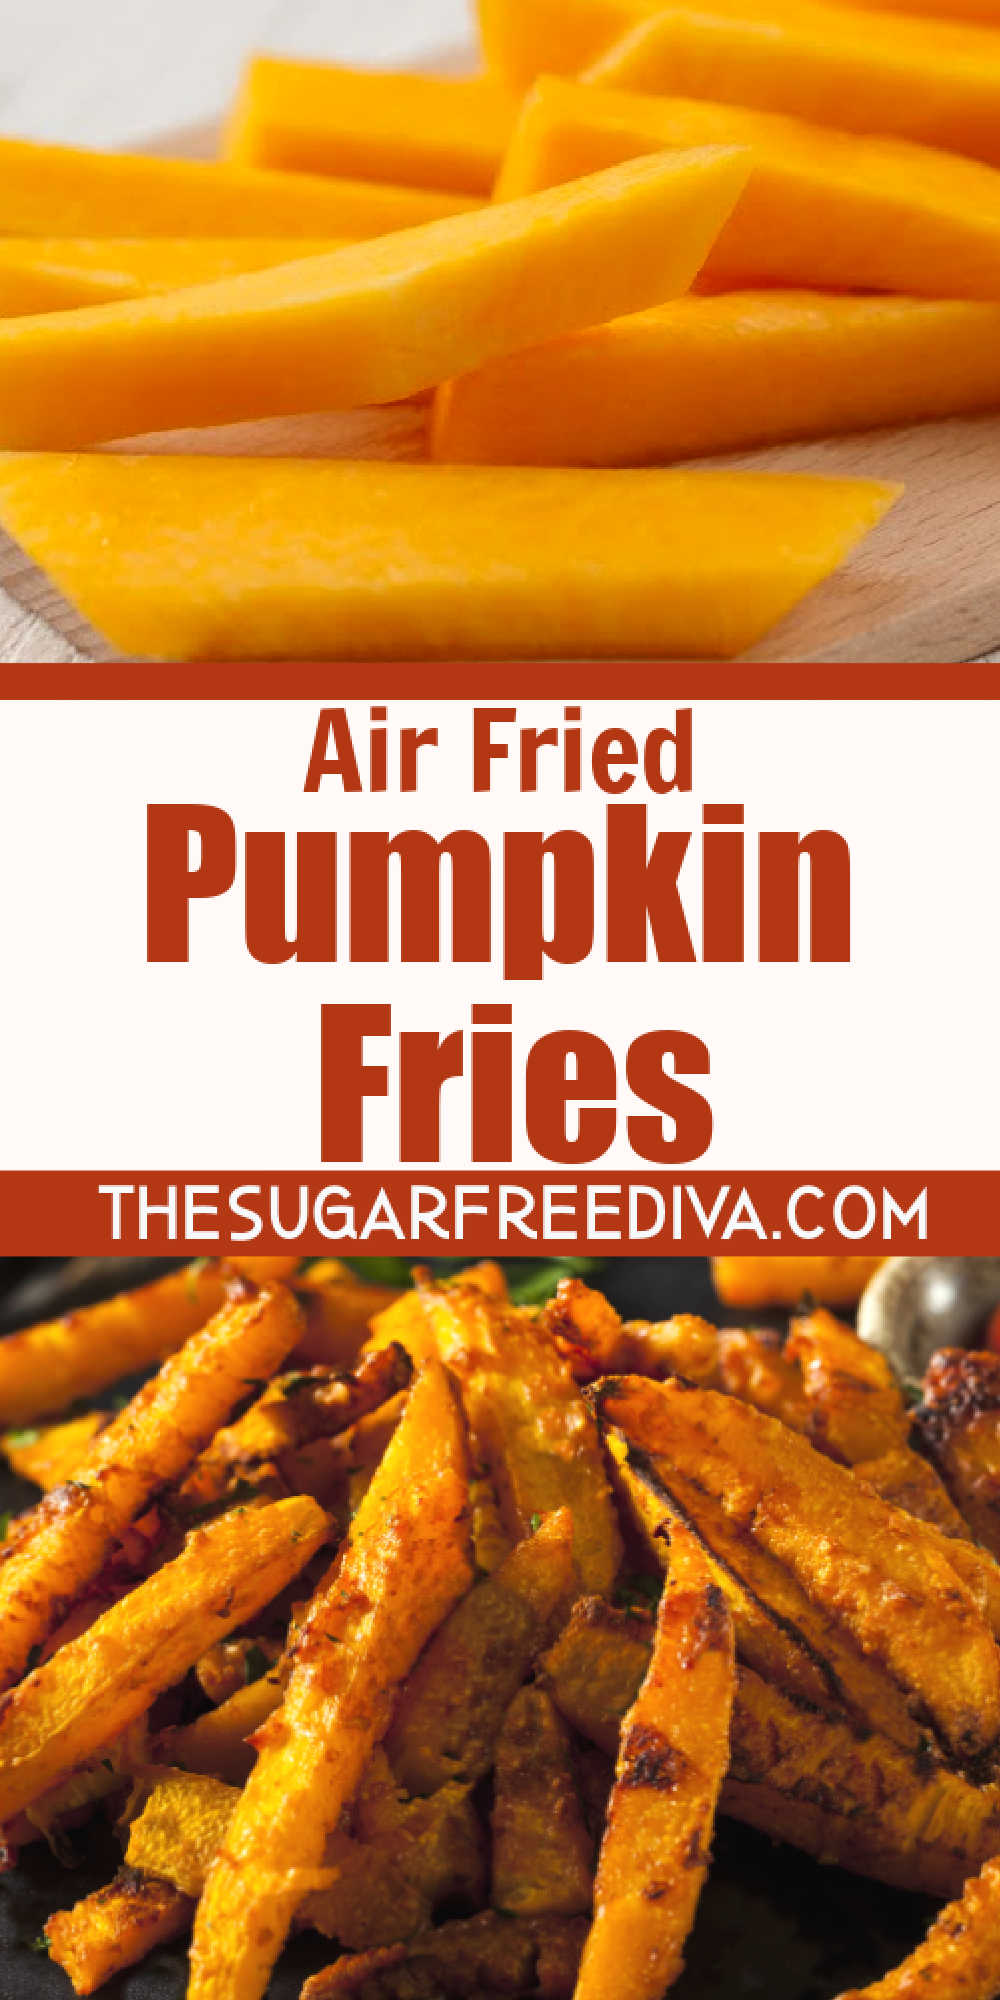 Air Fried Pumpkin Fries